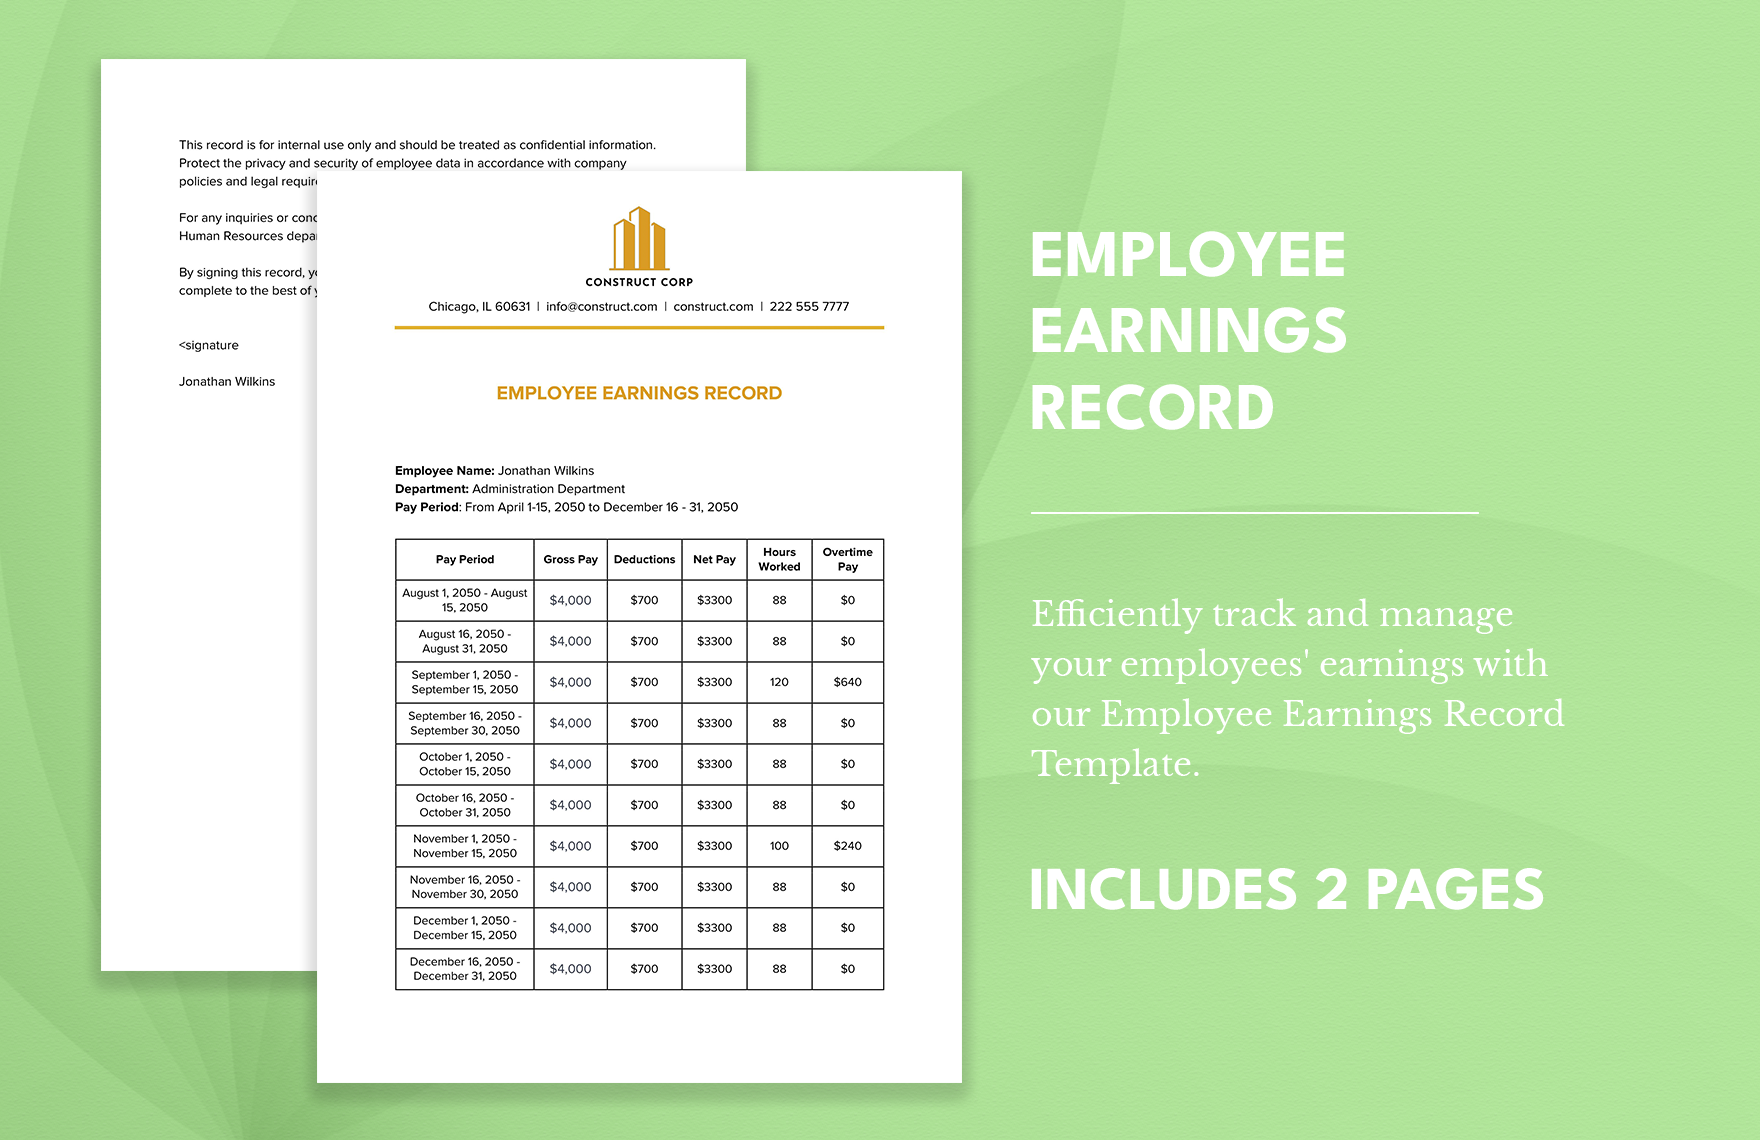 Employee Earnings Record